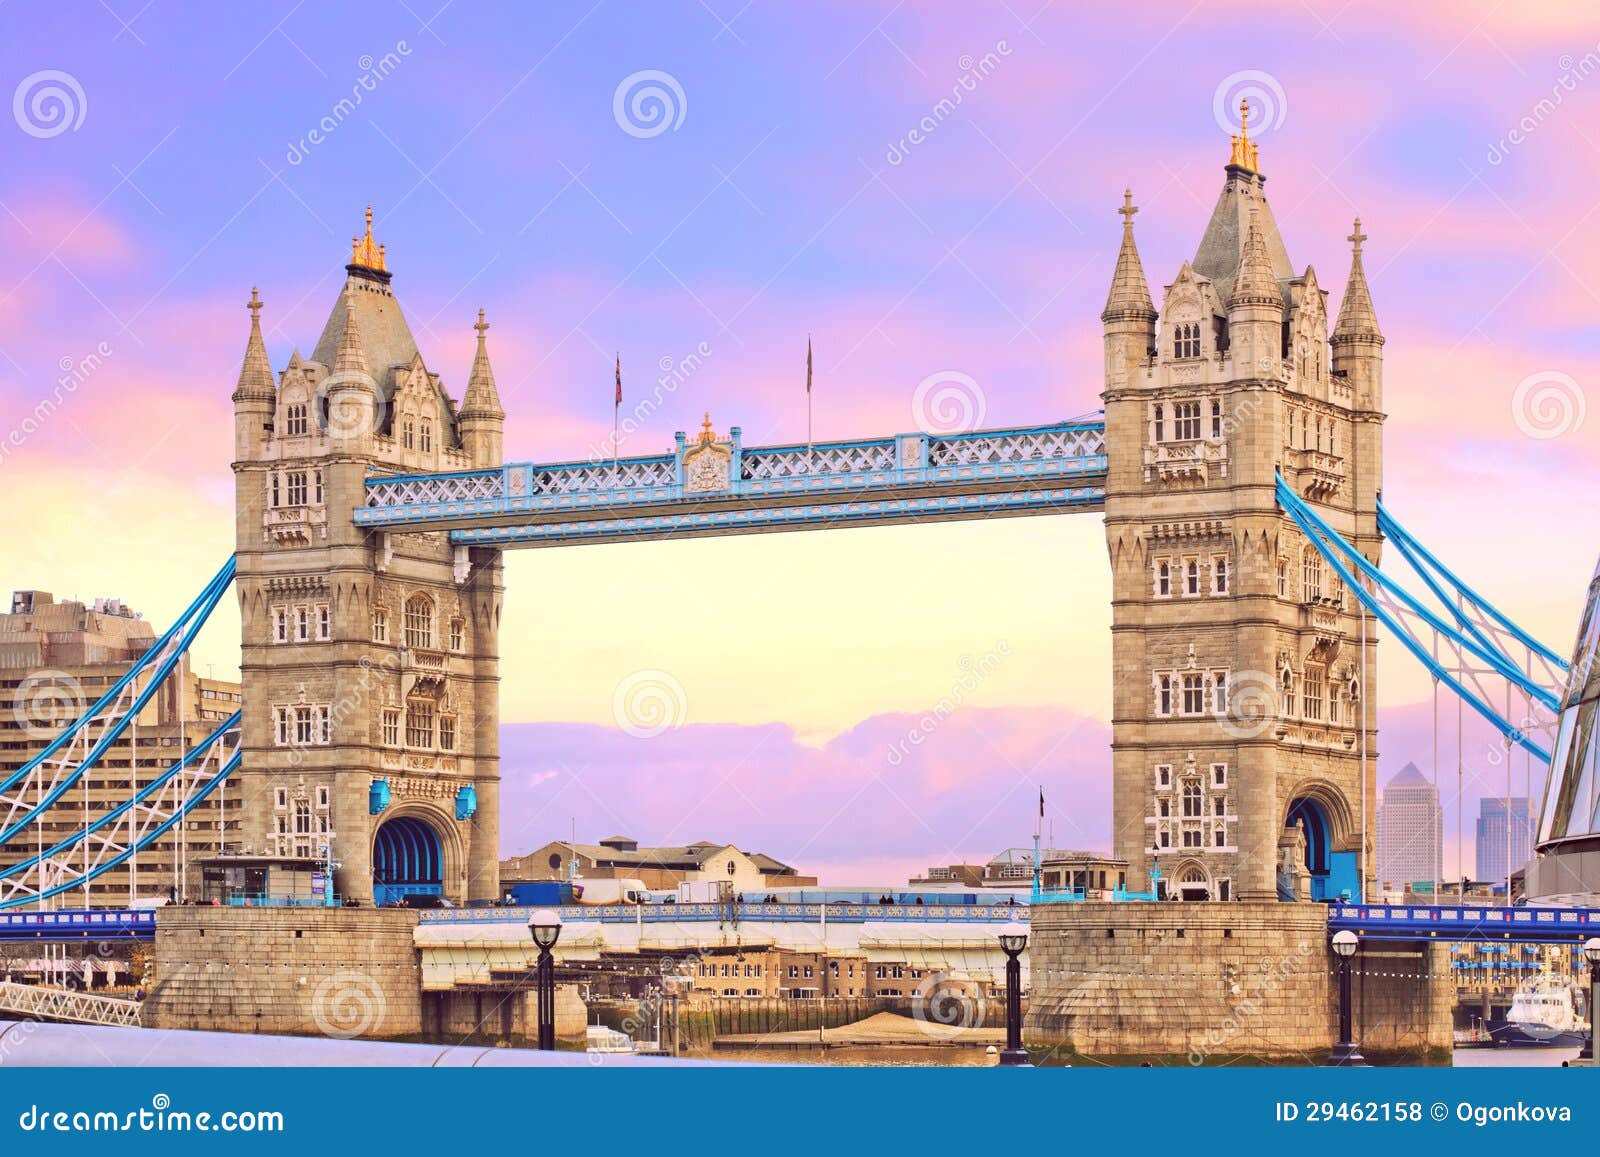 tower bridge at sunset. popular landmark in london, uk